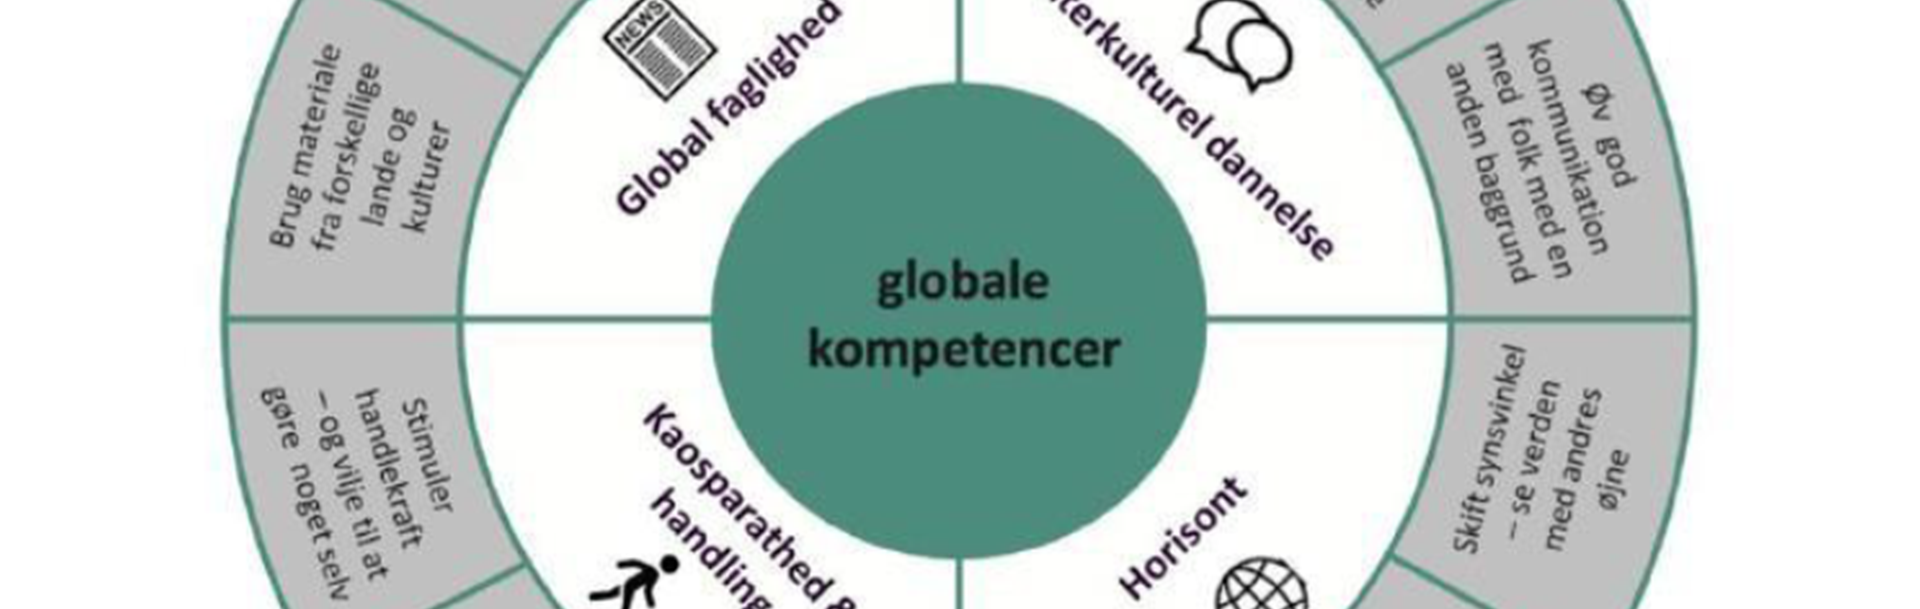 Globale kompetencehjul